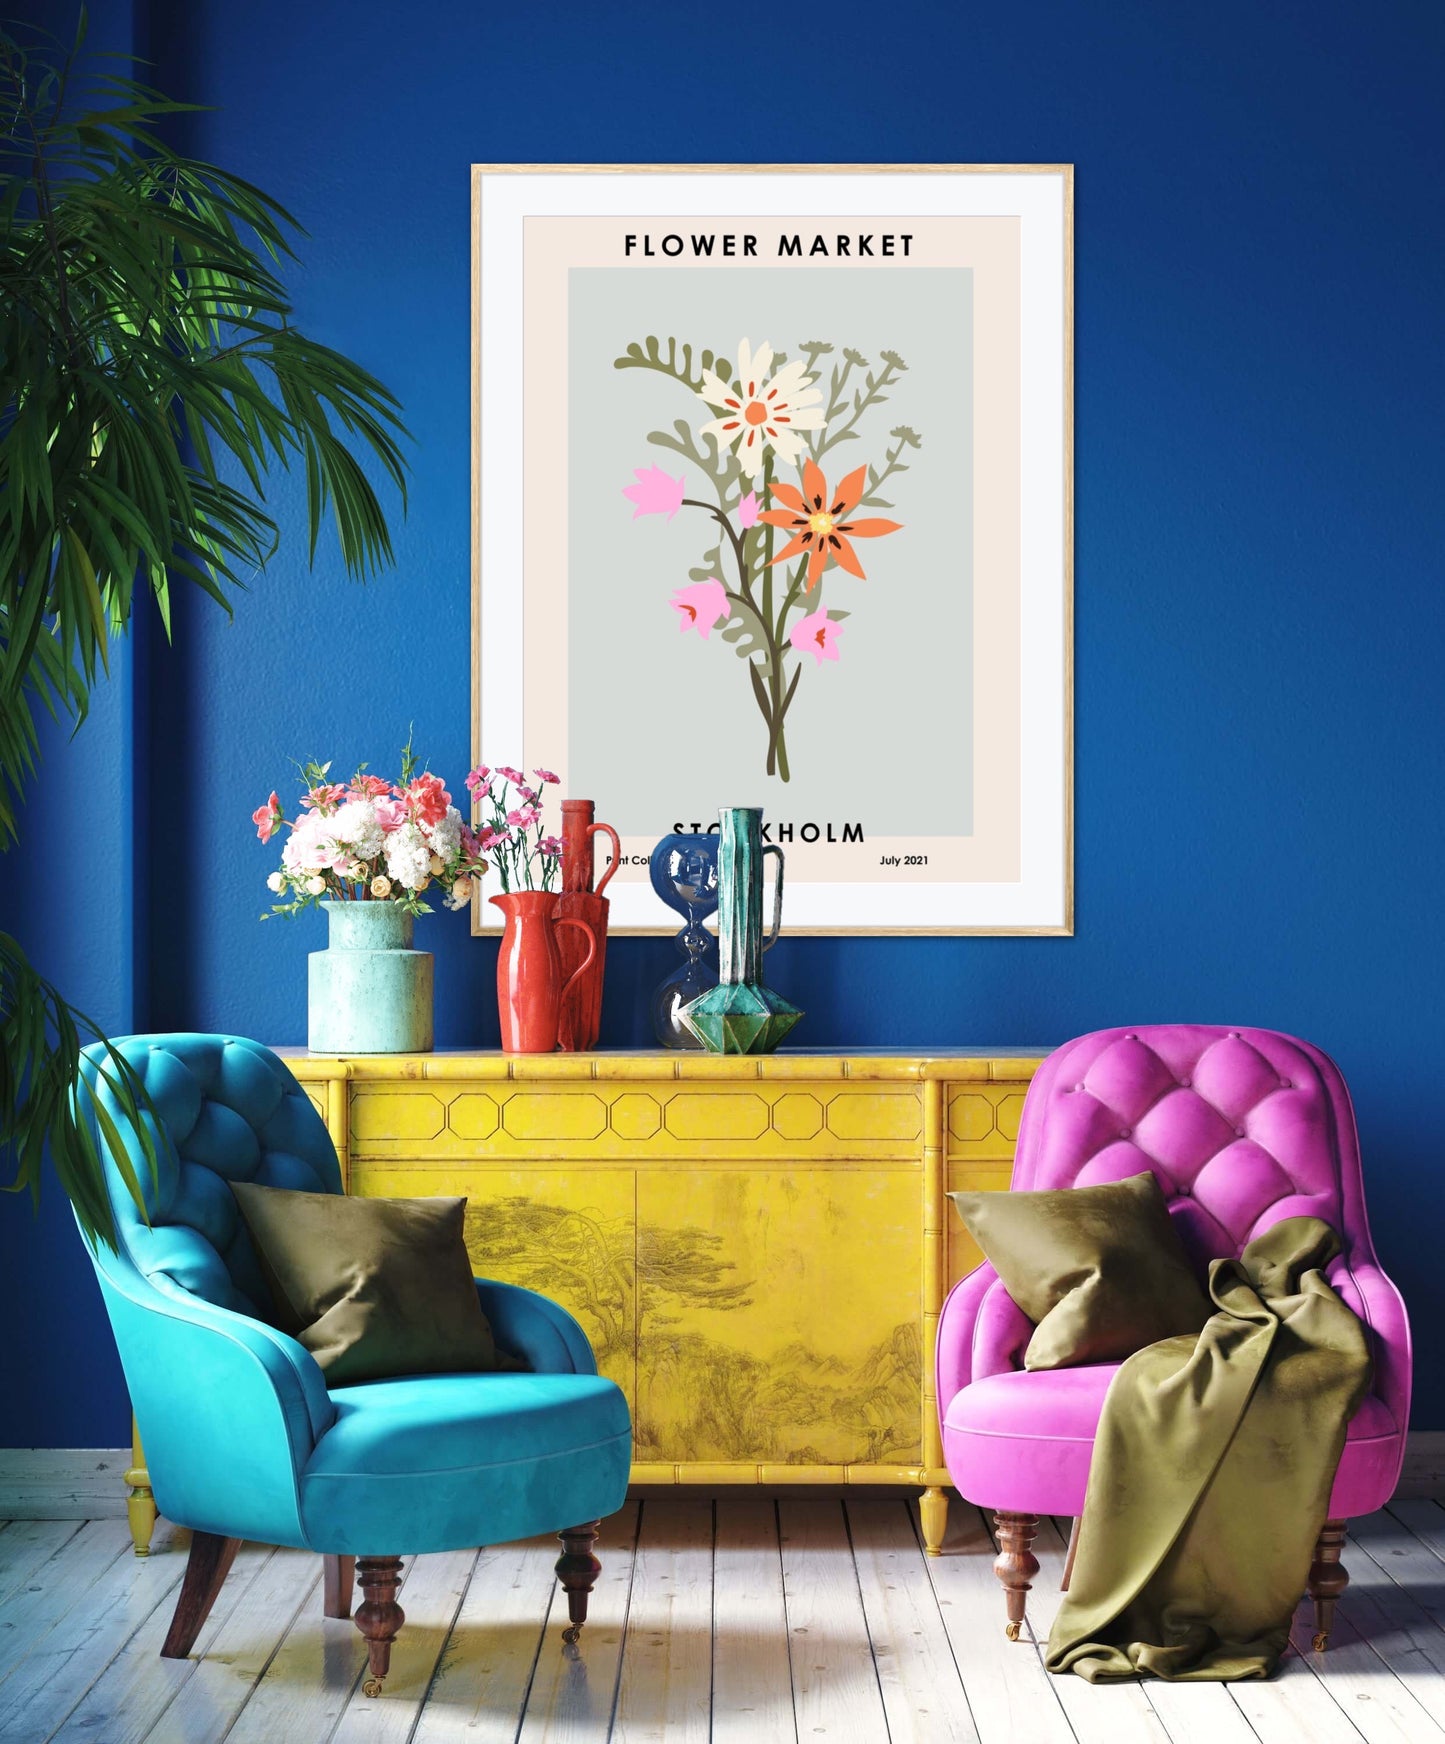 Stockholm Flower Market Print Premium Matte Paper Poster